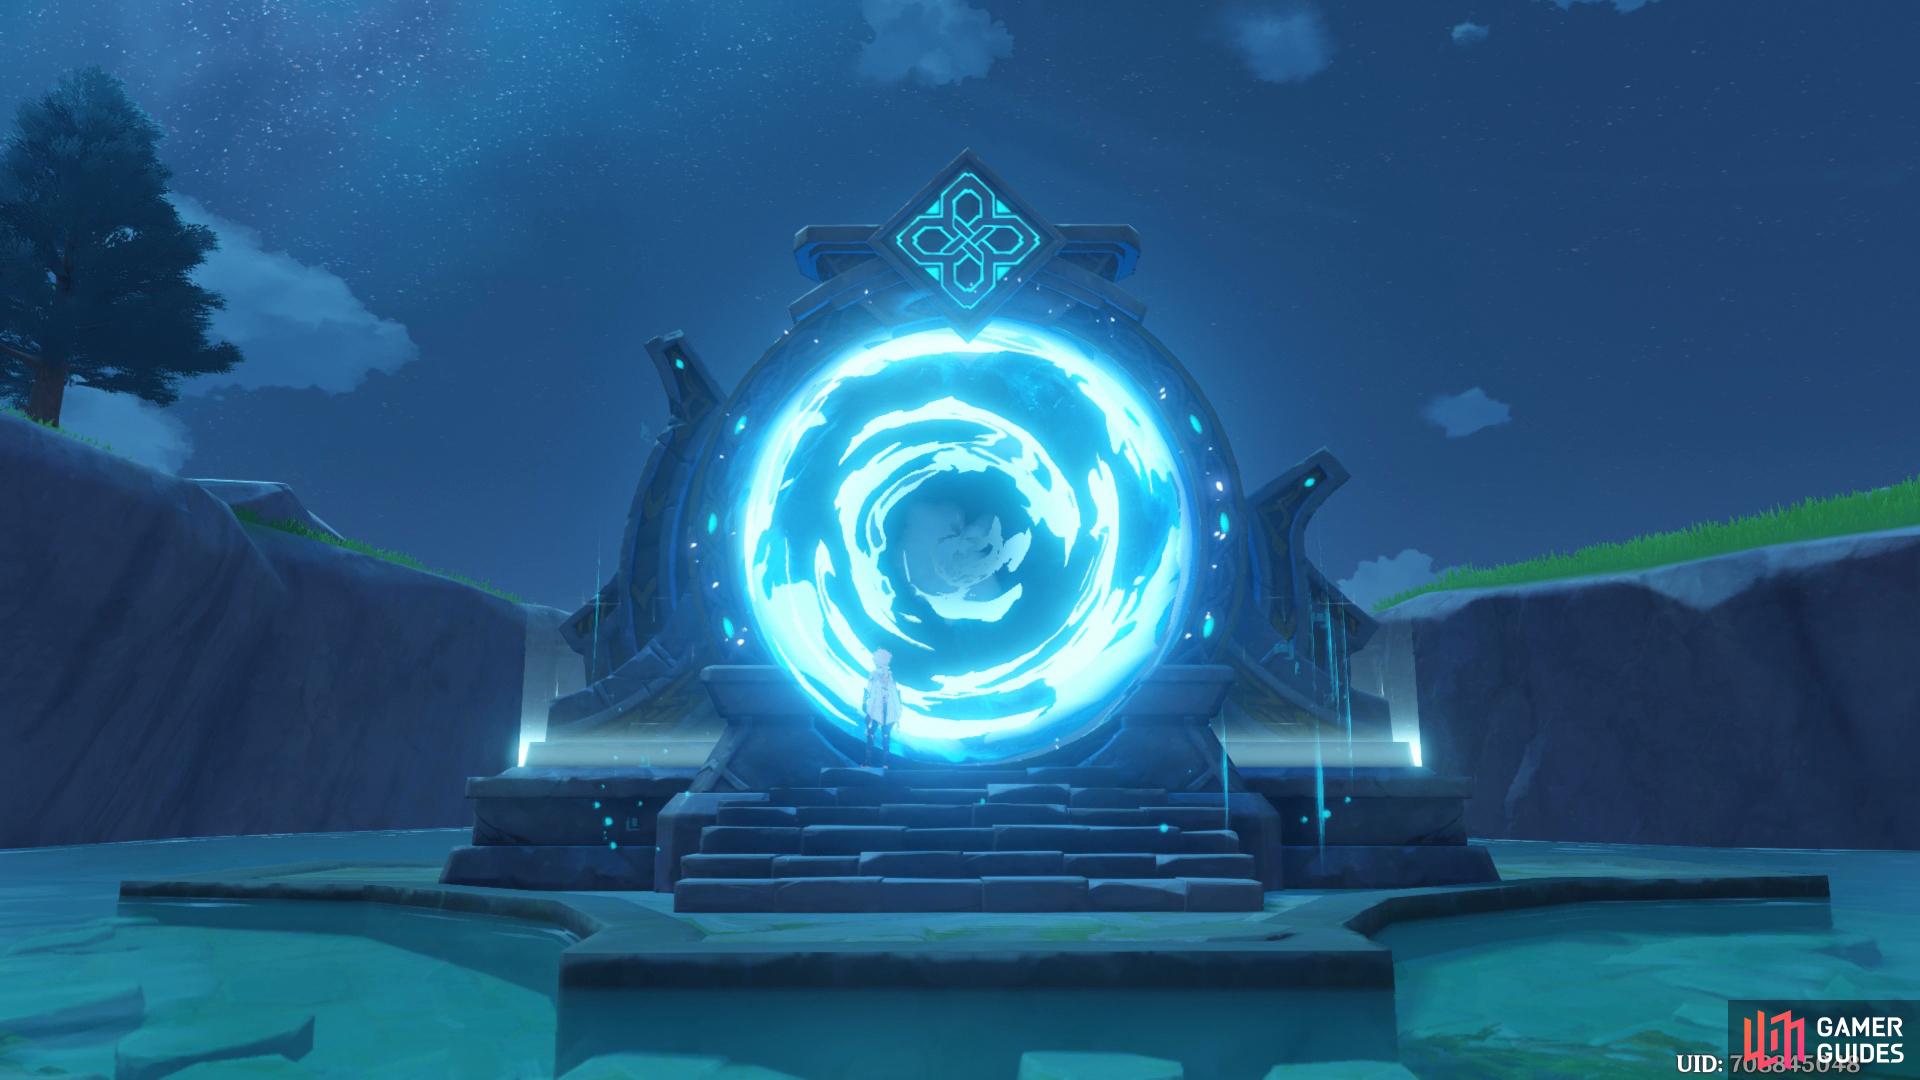 spiral abyss portal